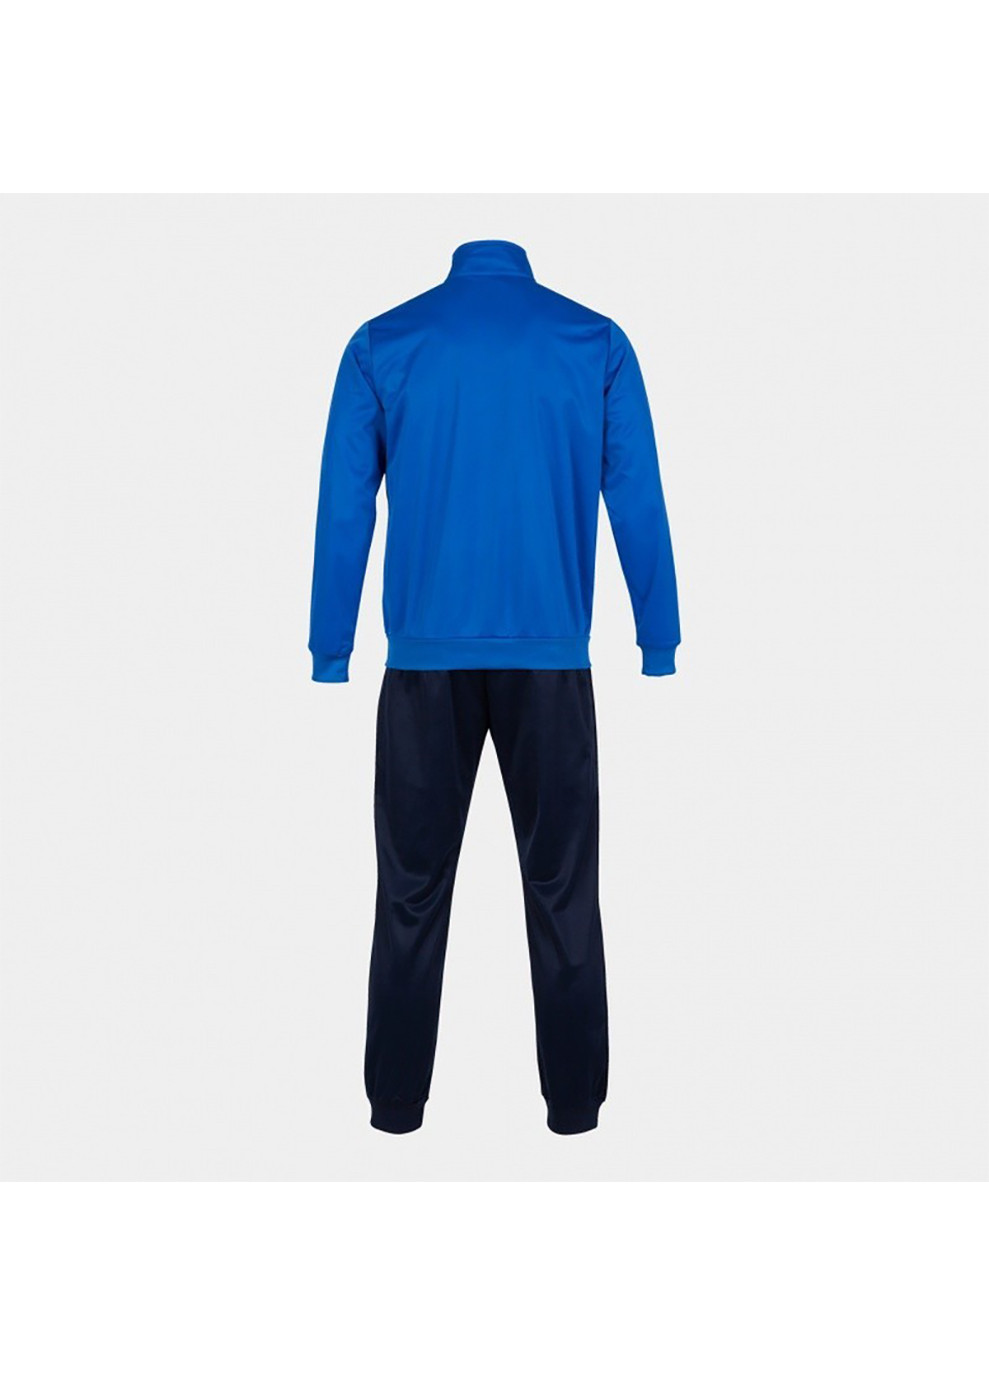 Спортивный костюм COLUMBUS TRACKSUIT голубой,синий Joma (260646110)